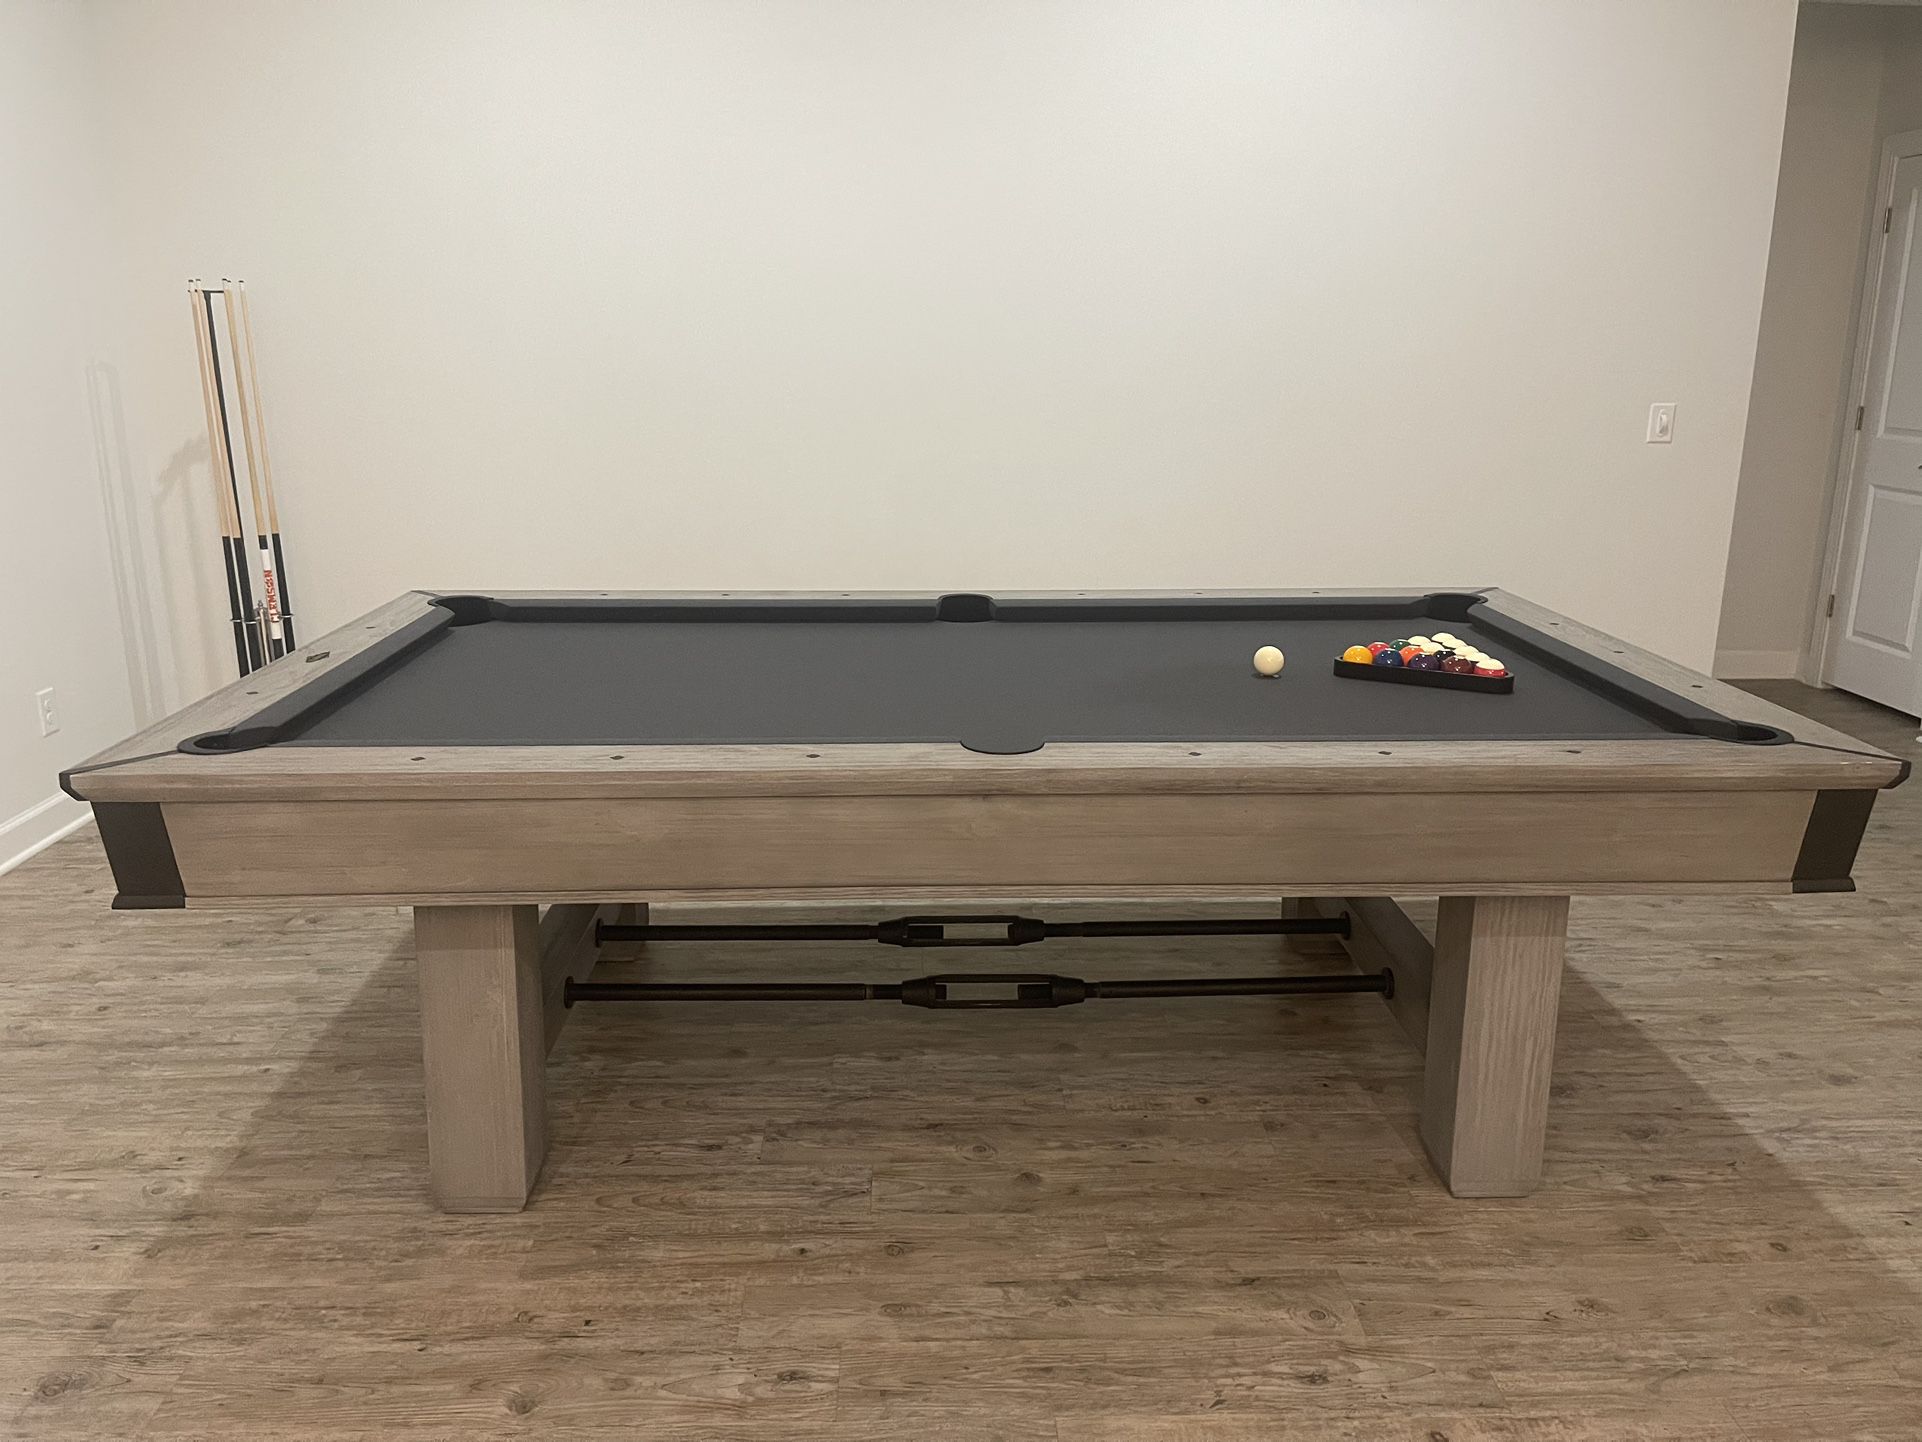 New 9 ft Brunswick Professional Pool Table (gray)